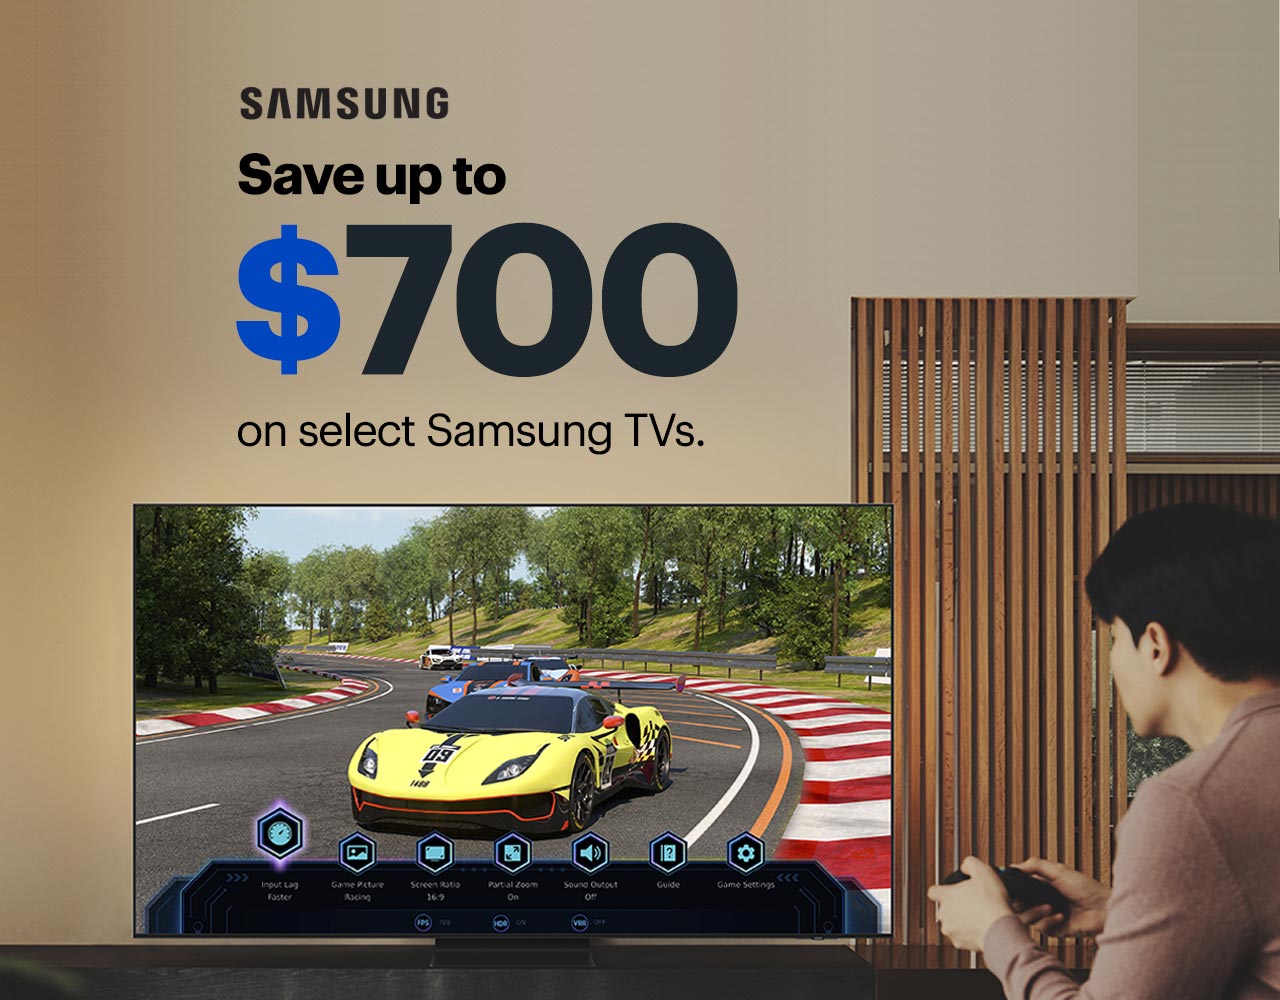 Save up to $700 on select Samsung TVs